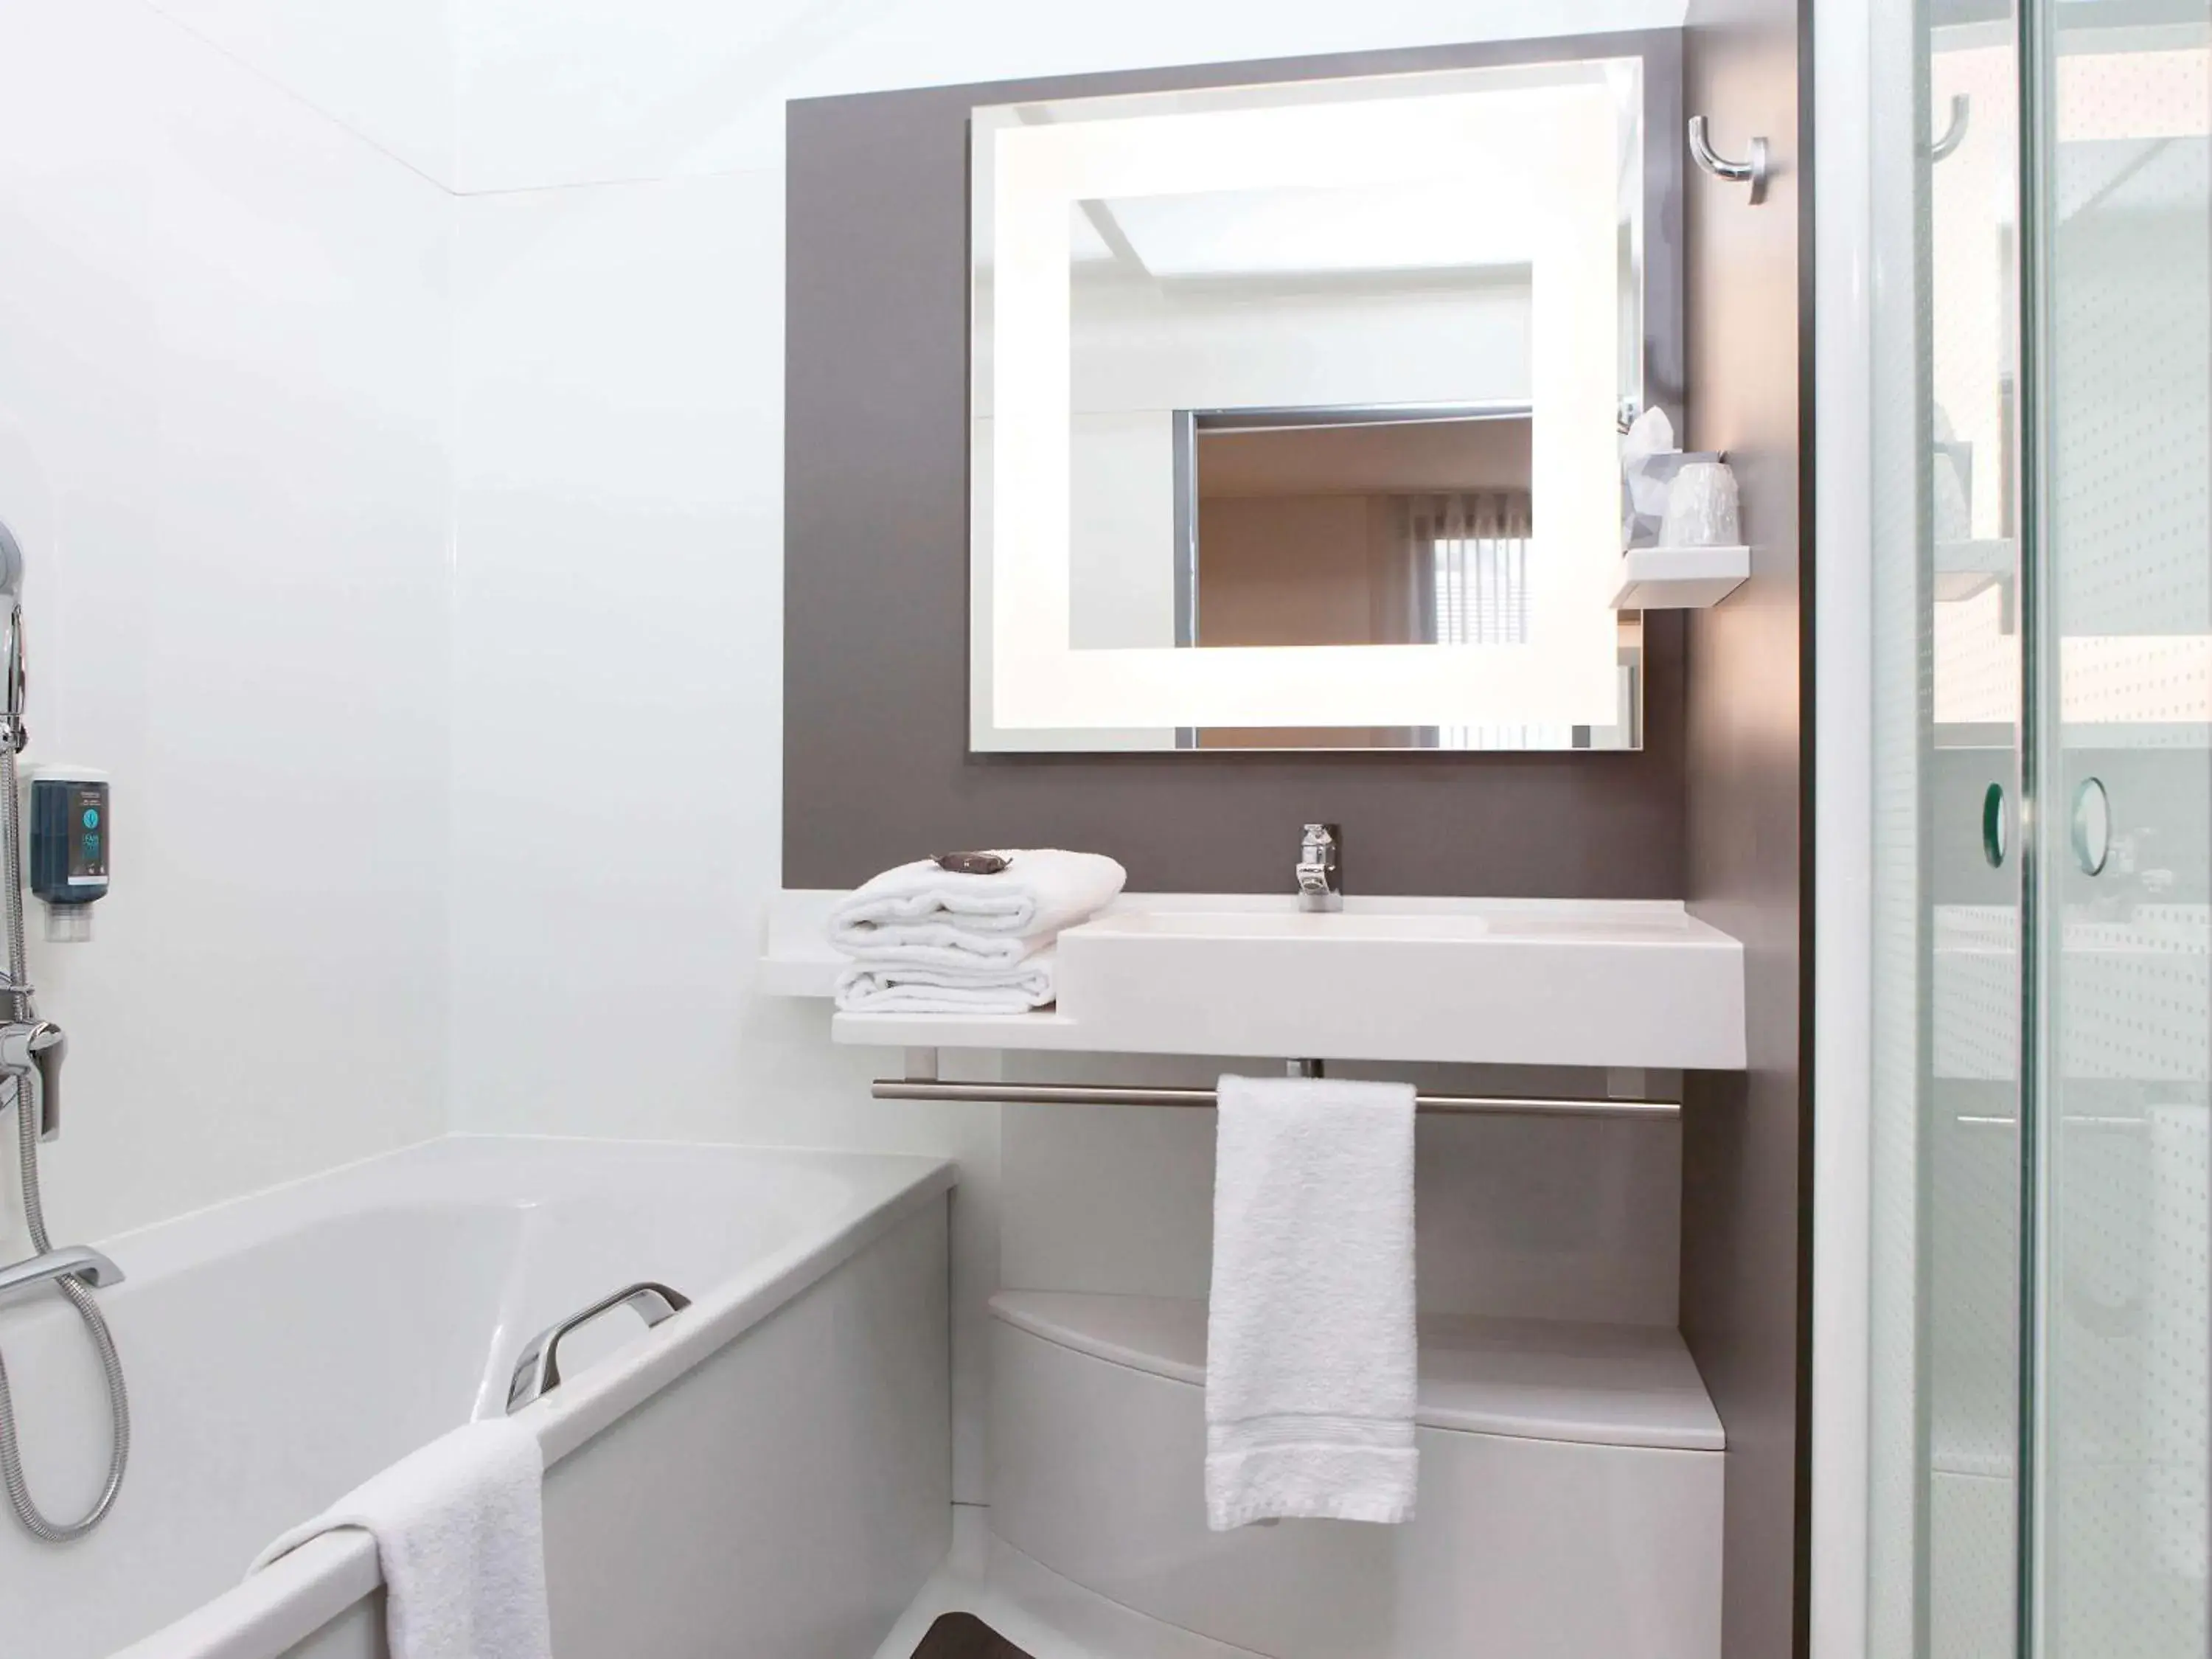 Photo of the whole room, Bathroom in Novotel Suites Paris Stade de France